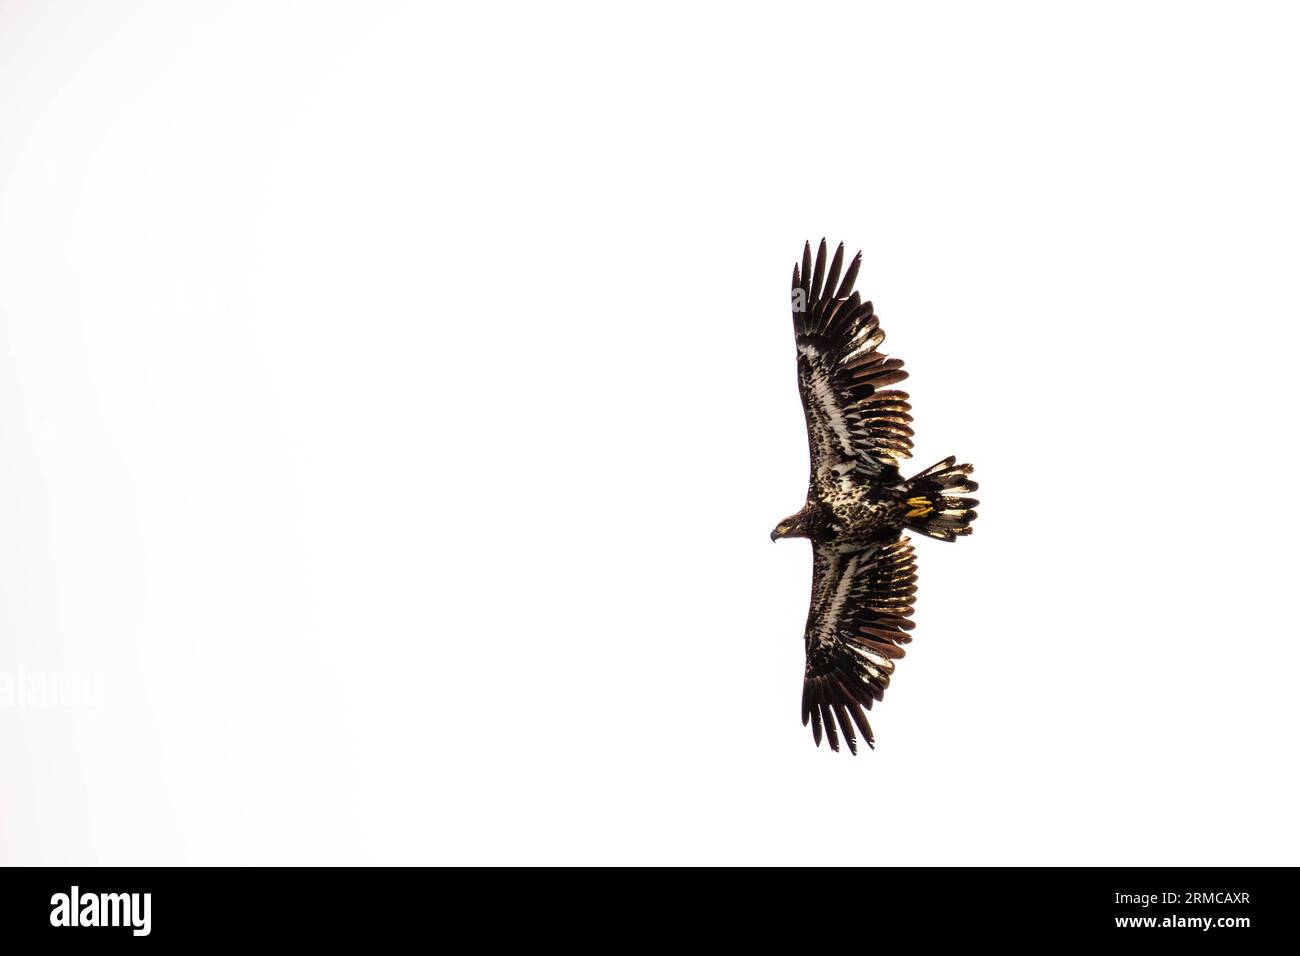 Bald eagle (Haliaeetus leuocephalus) young, flying on a white background with copy space, horizontal Stock Photo